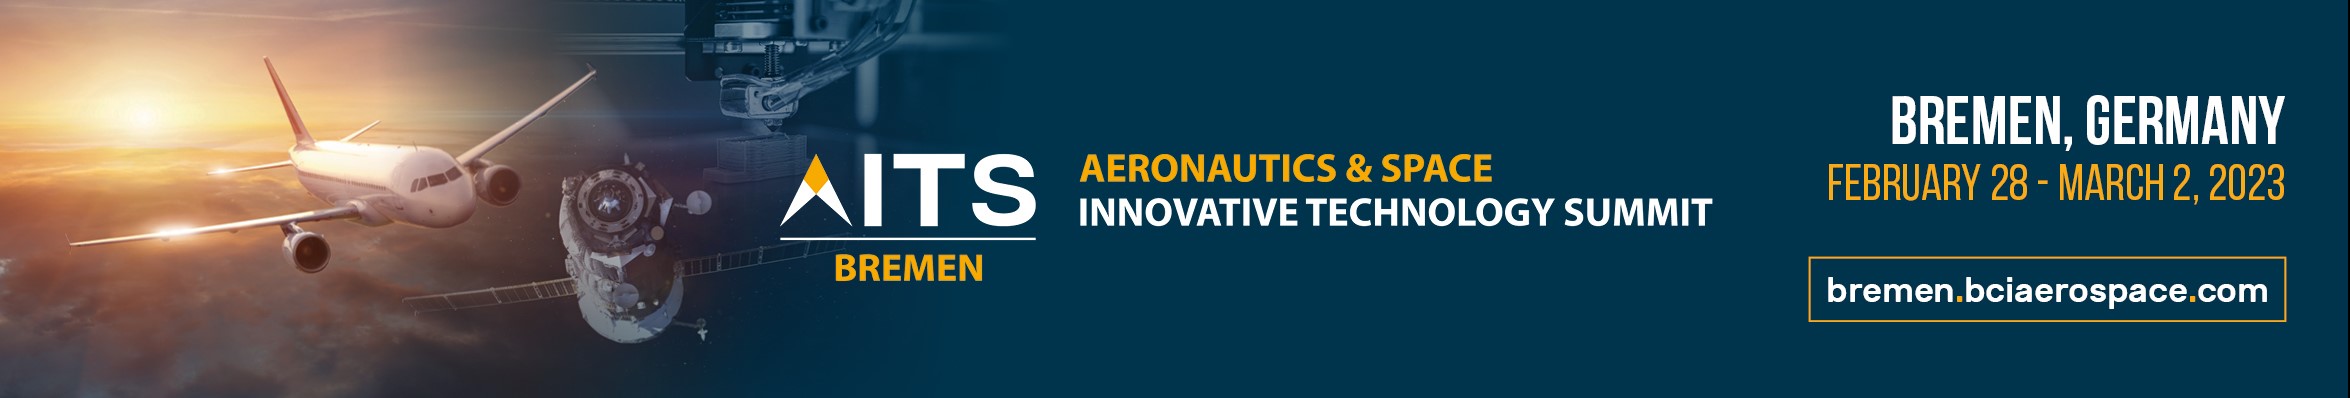 AITS Aeronautics & Space Innovative Technology Summit